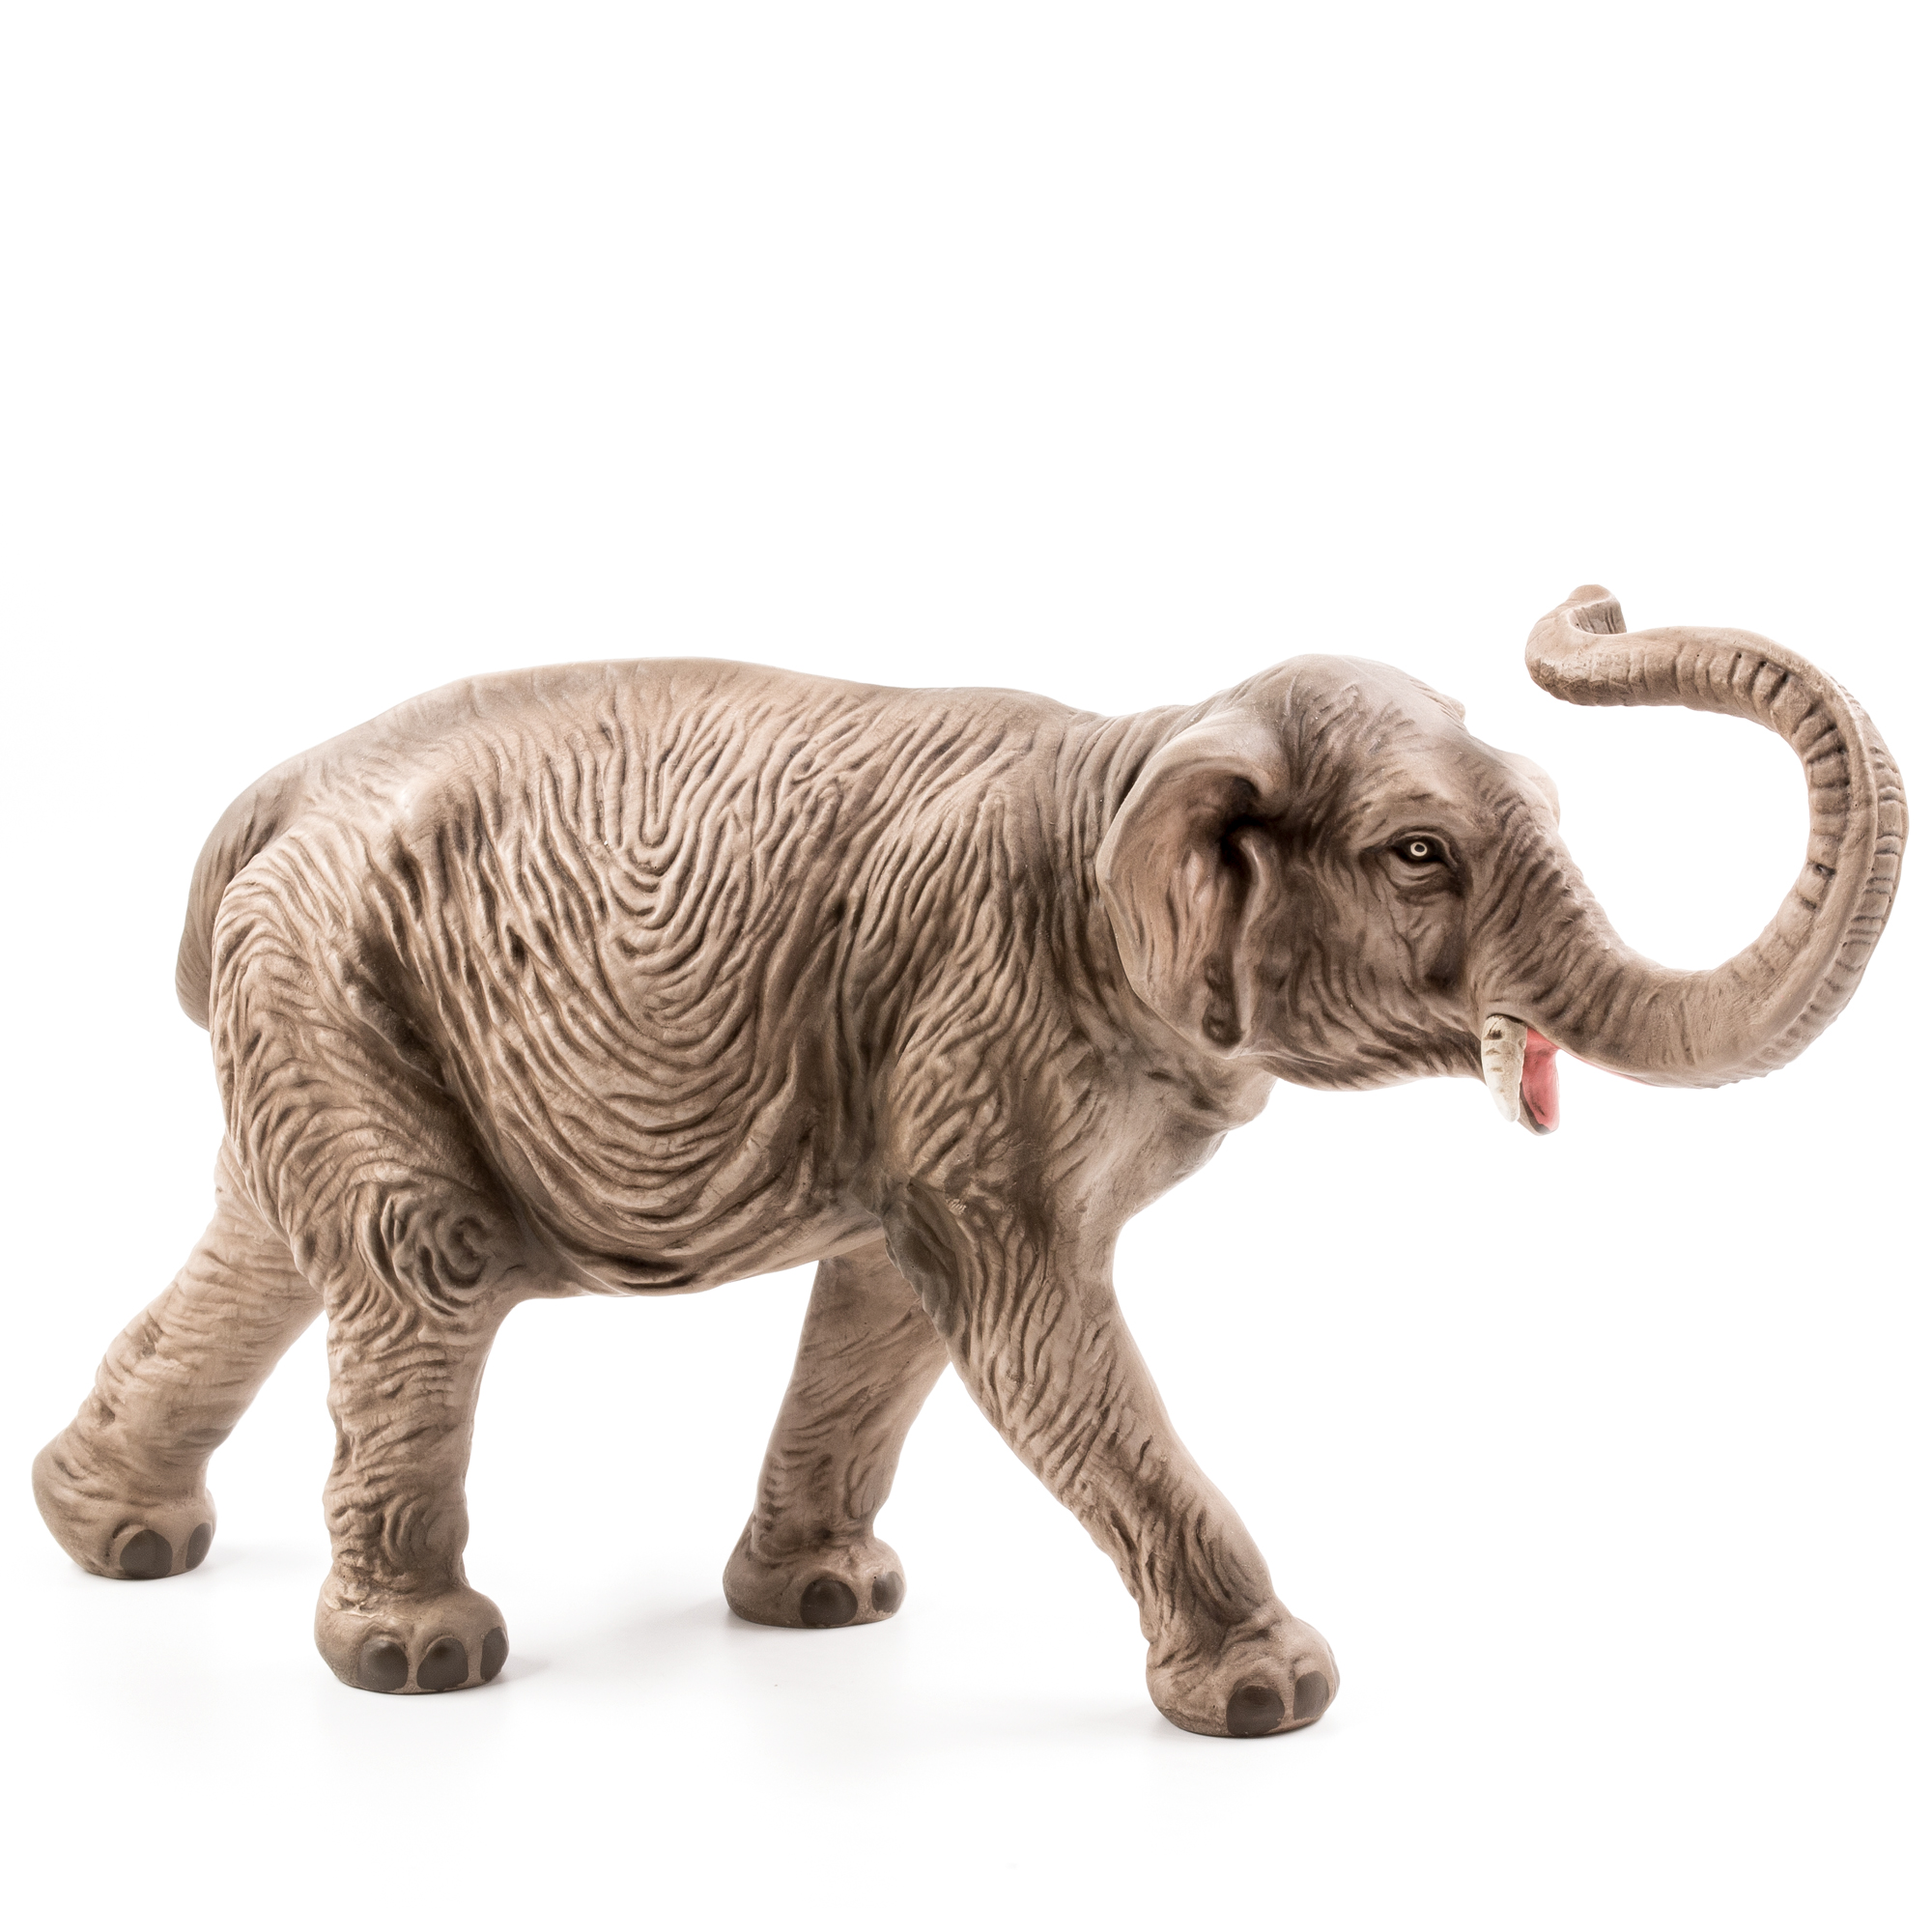 Elefant mit erhobenem Rüssel, zu 17cm Figuren